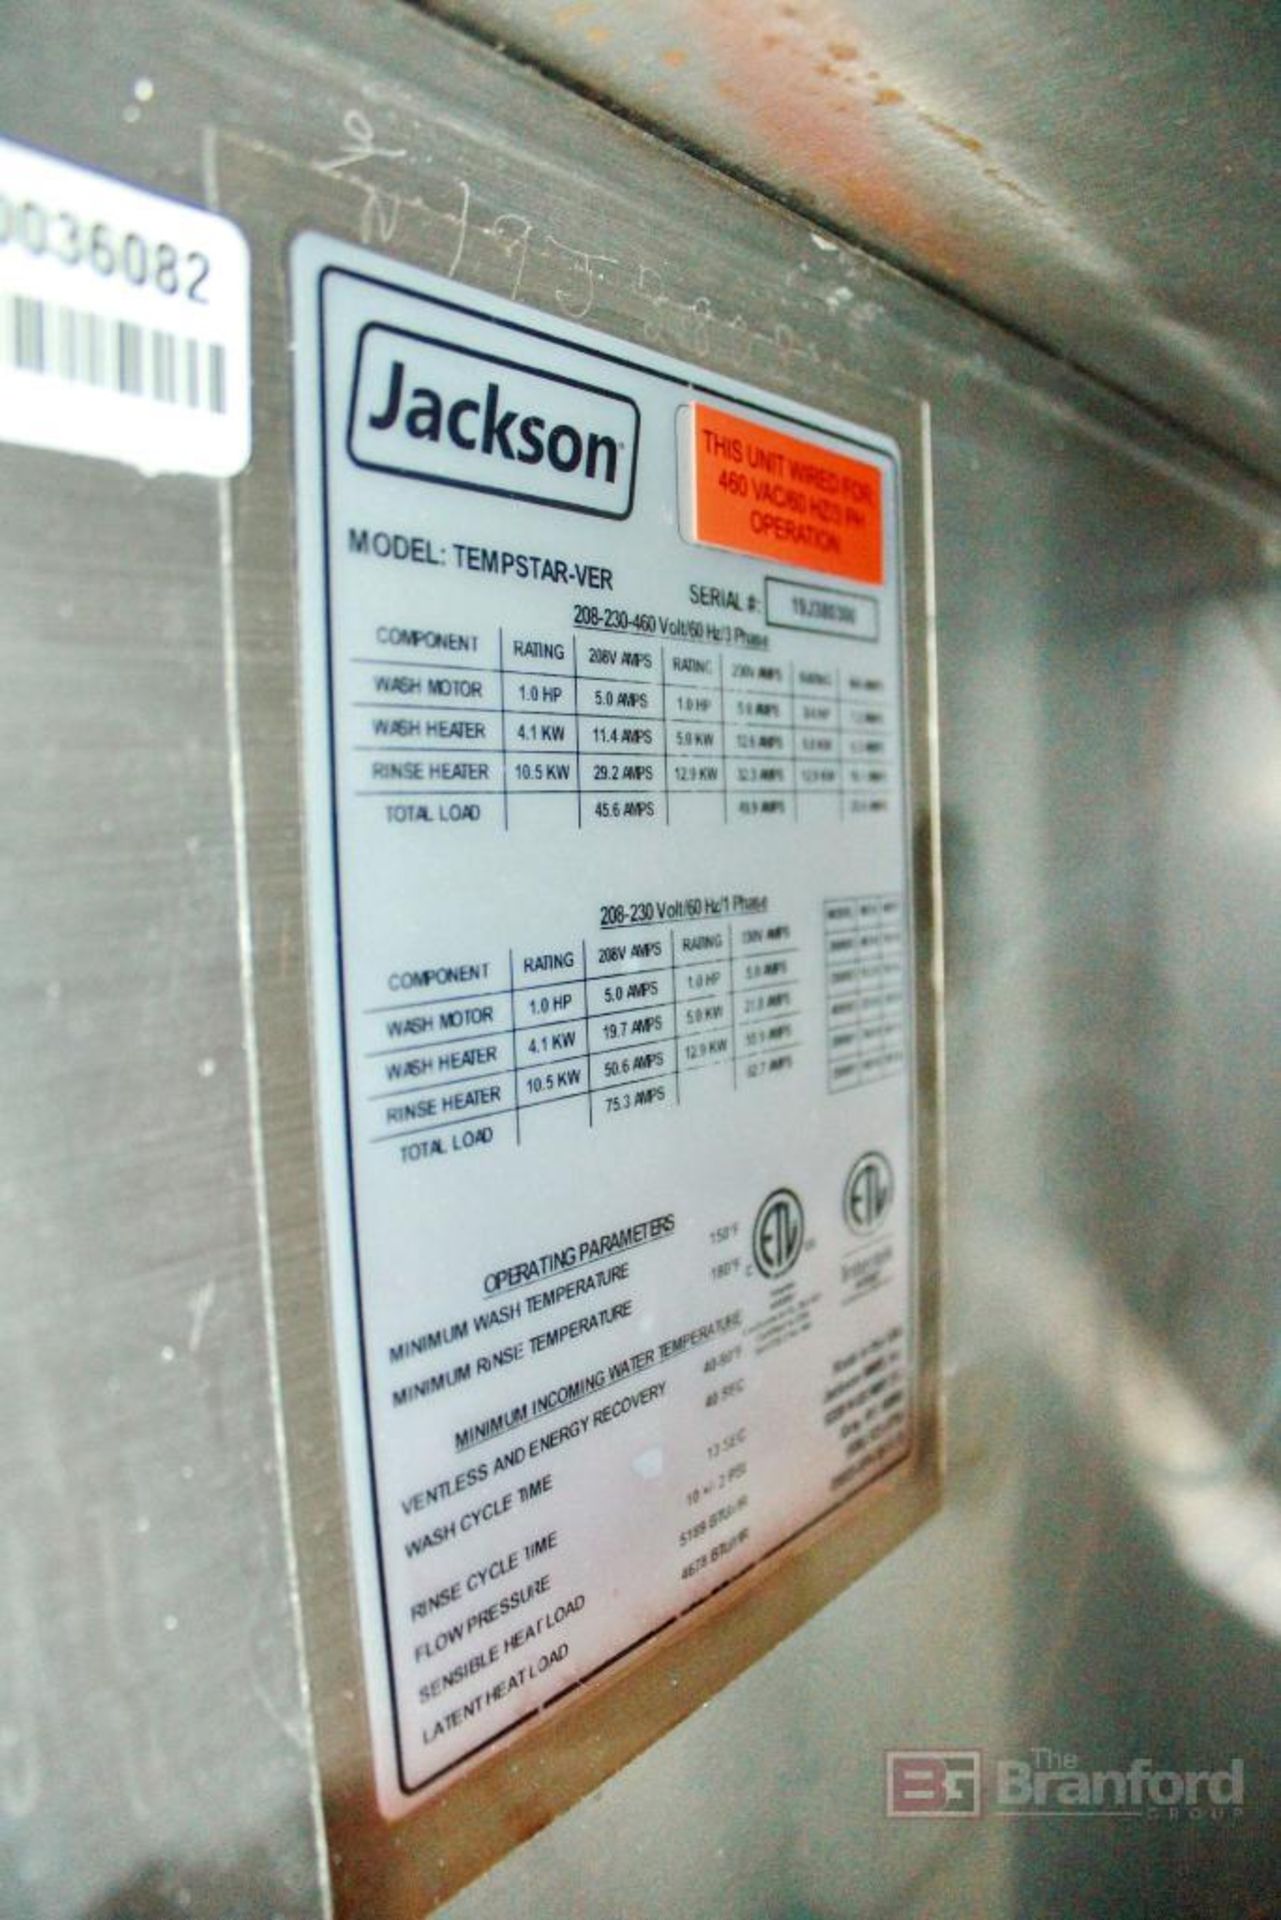 Jackson TEMPSTAR Commercial Dishwasher Model Tempstar-VER - Image 5 of 10